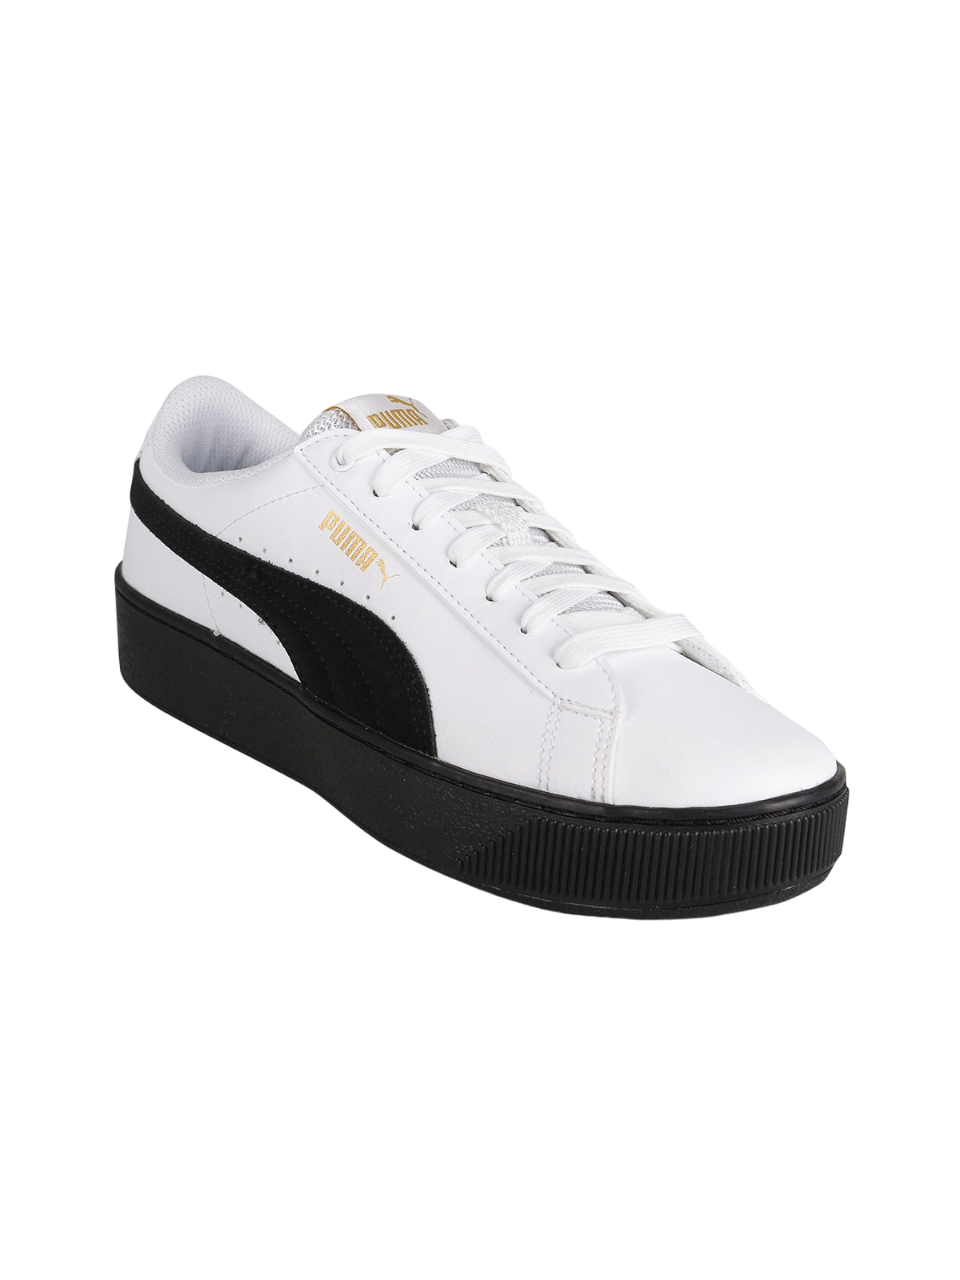 Puma scarpa sneakers da donna Vikky Platform 364893 04 bianco nero